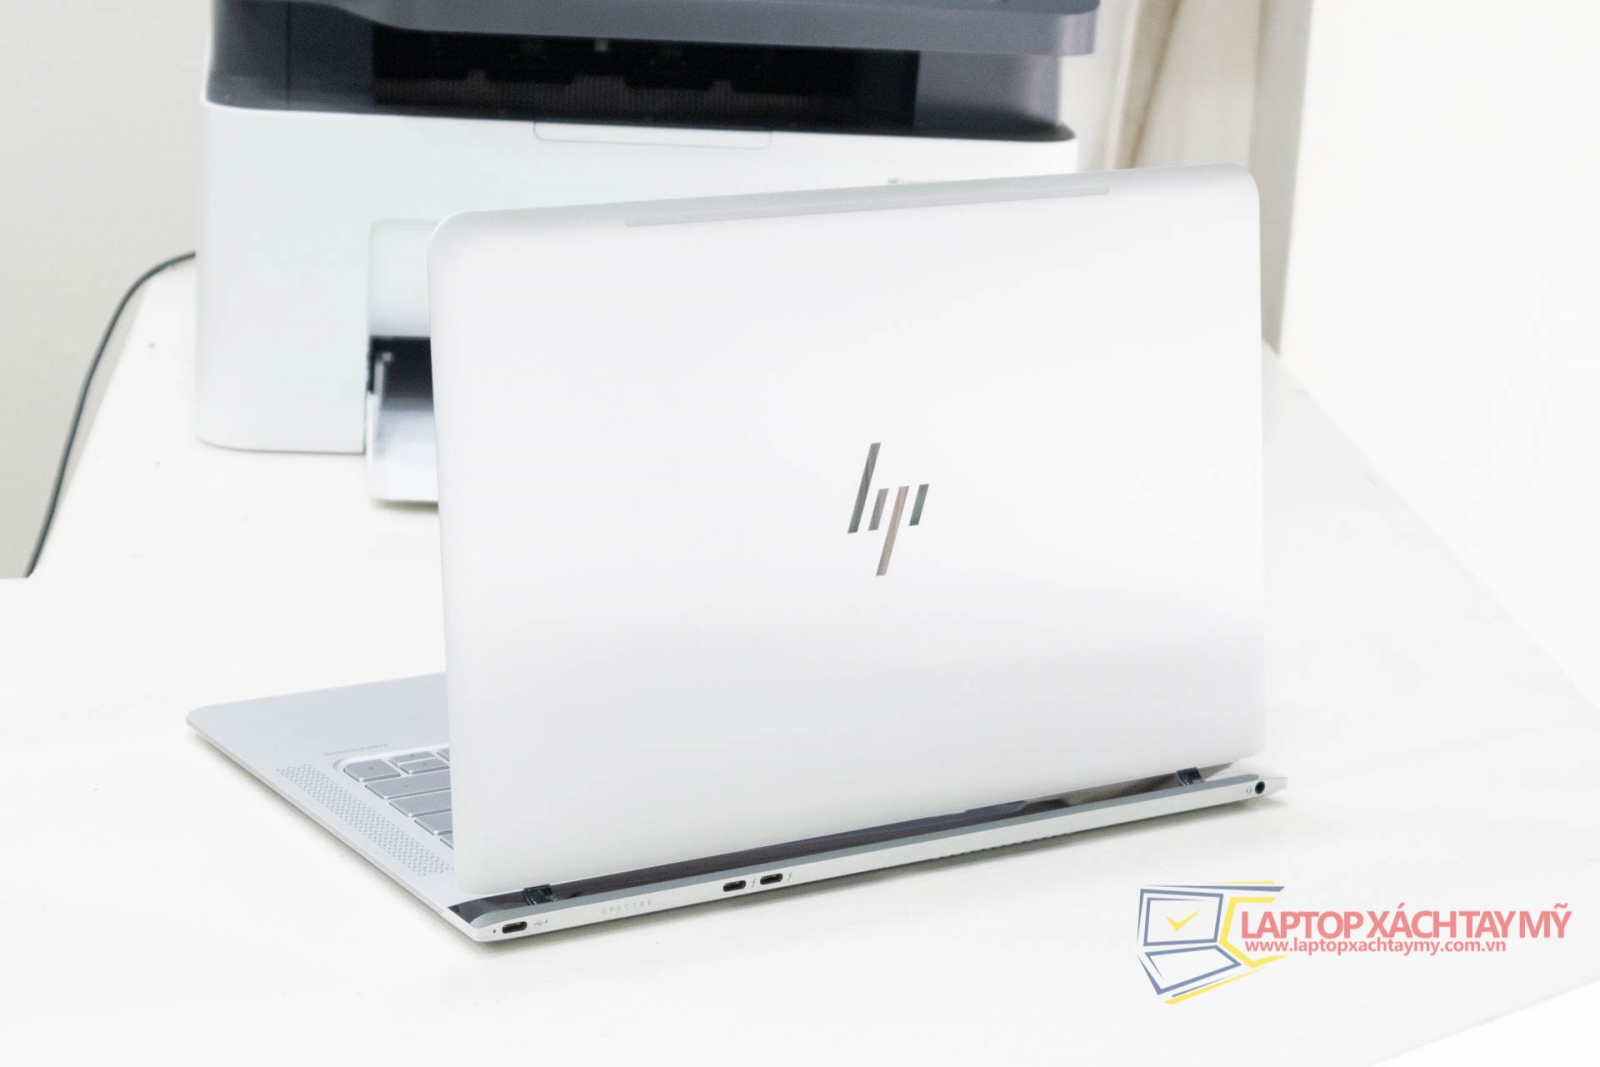 HP SPECTRE Notebook 13 i7 7500U, 8Gb Ram, 256Gb SSD, Màn hình Full HD